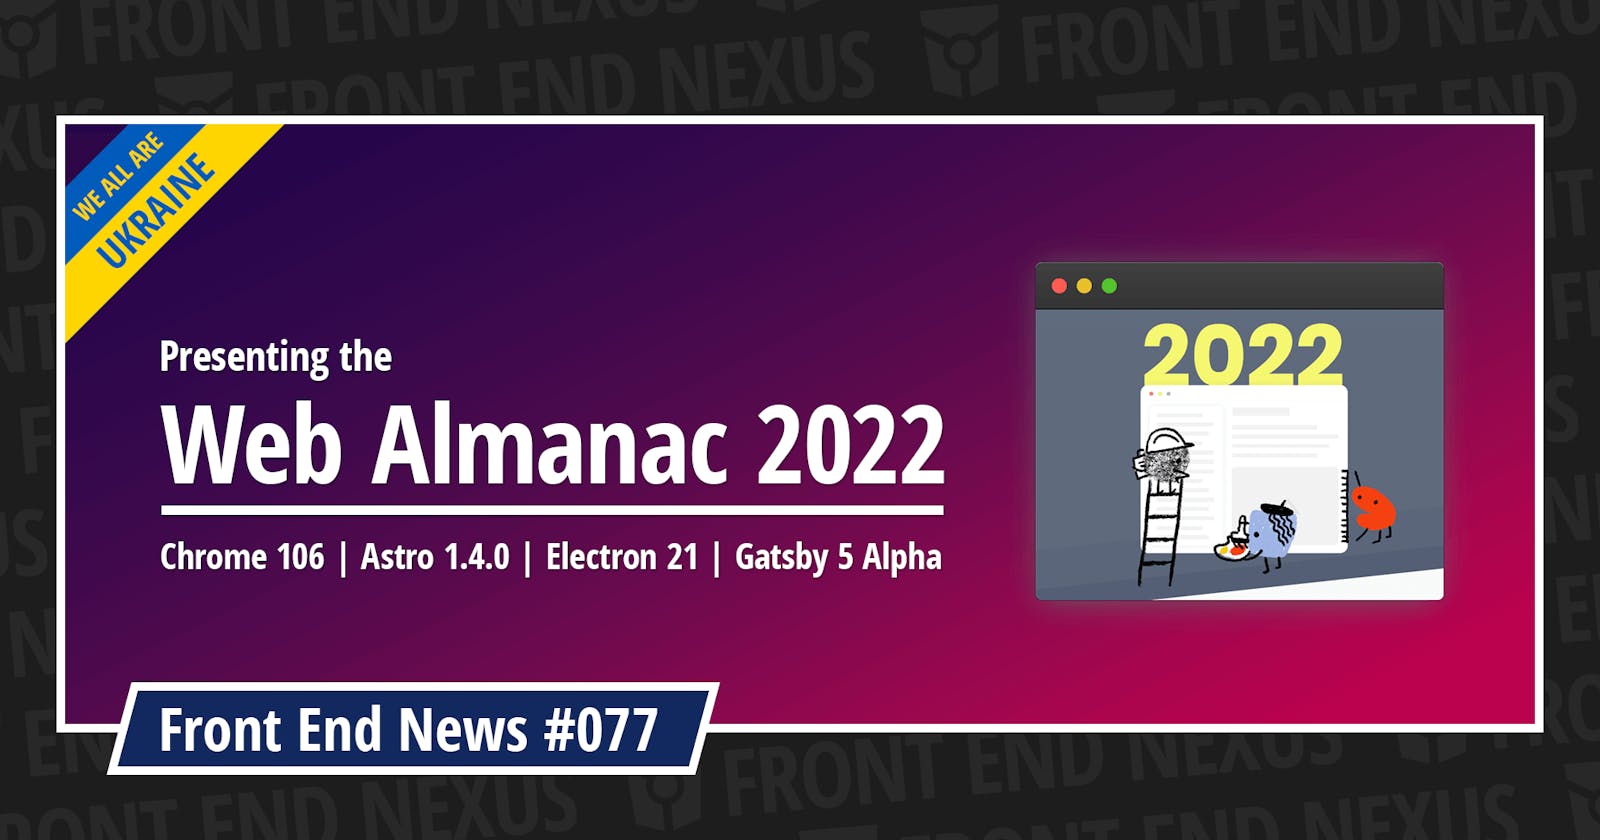 Web Almanac 2022, Chrome 106, Astro 1.4.0, Electron 21, Gatsby 5 Alpha, and more | Front End News #077